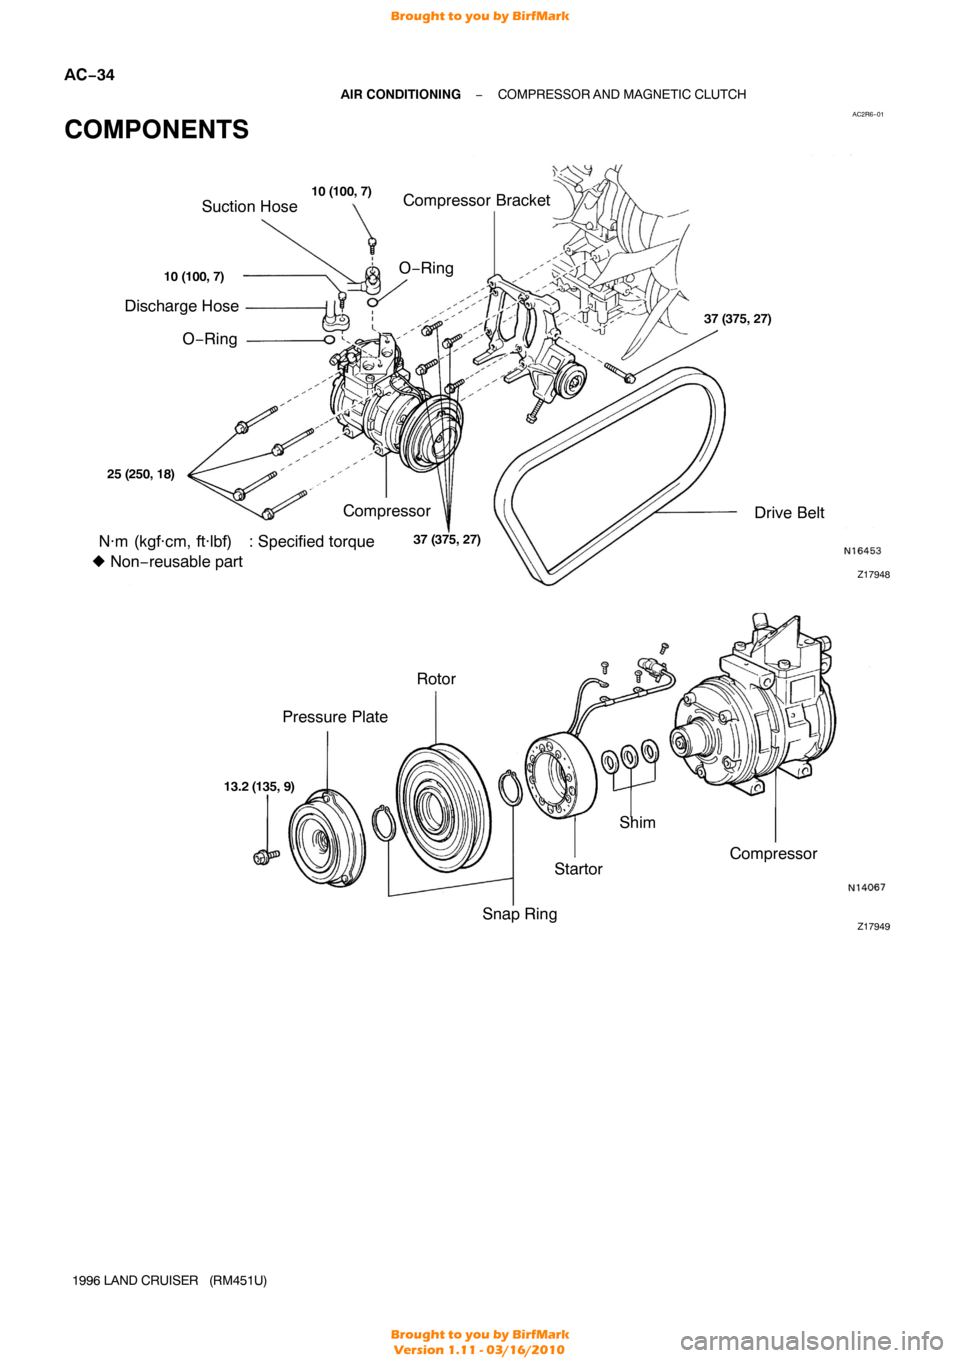 TOYOTA LAND CRUISER 1996 J80 Manual PDF AC2R6−01
Z17949
Pressure Plate Rotor
Shim
Startor
Snap Ring Compressor
13.2 
(135, 9)
Z17948
Suction Hose
Discharge Hose
Drive Belt
Compressor Compressor Bracket
O−Ring O−Ring
37 (375, 27)
N·m 